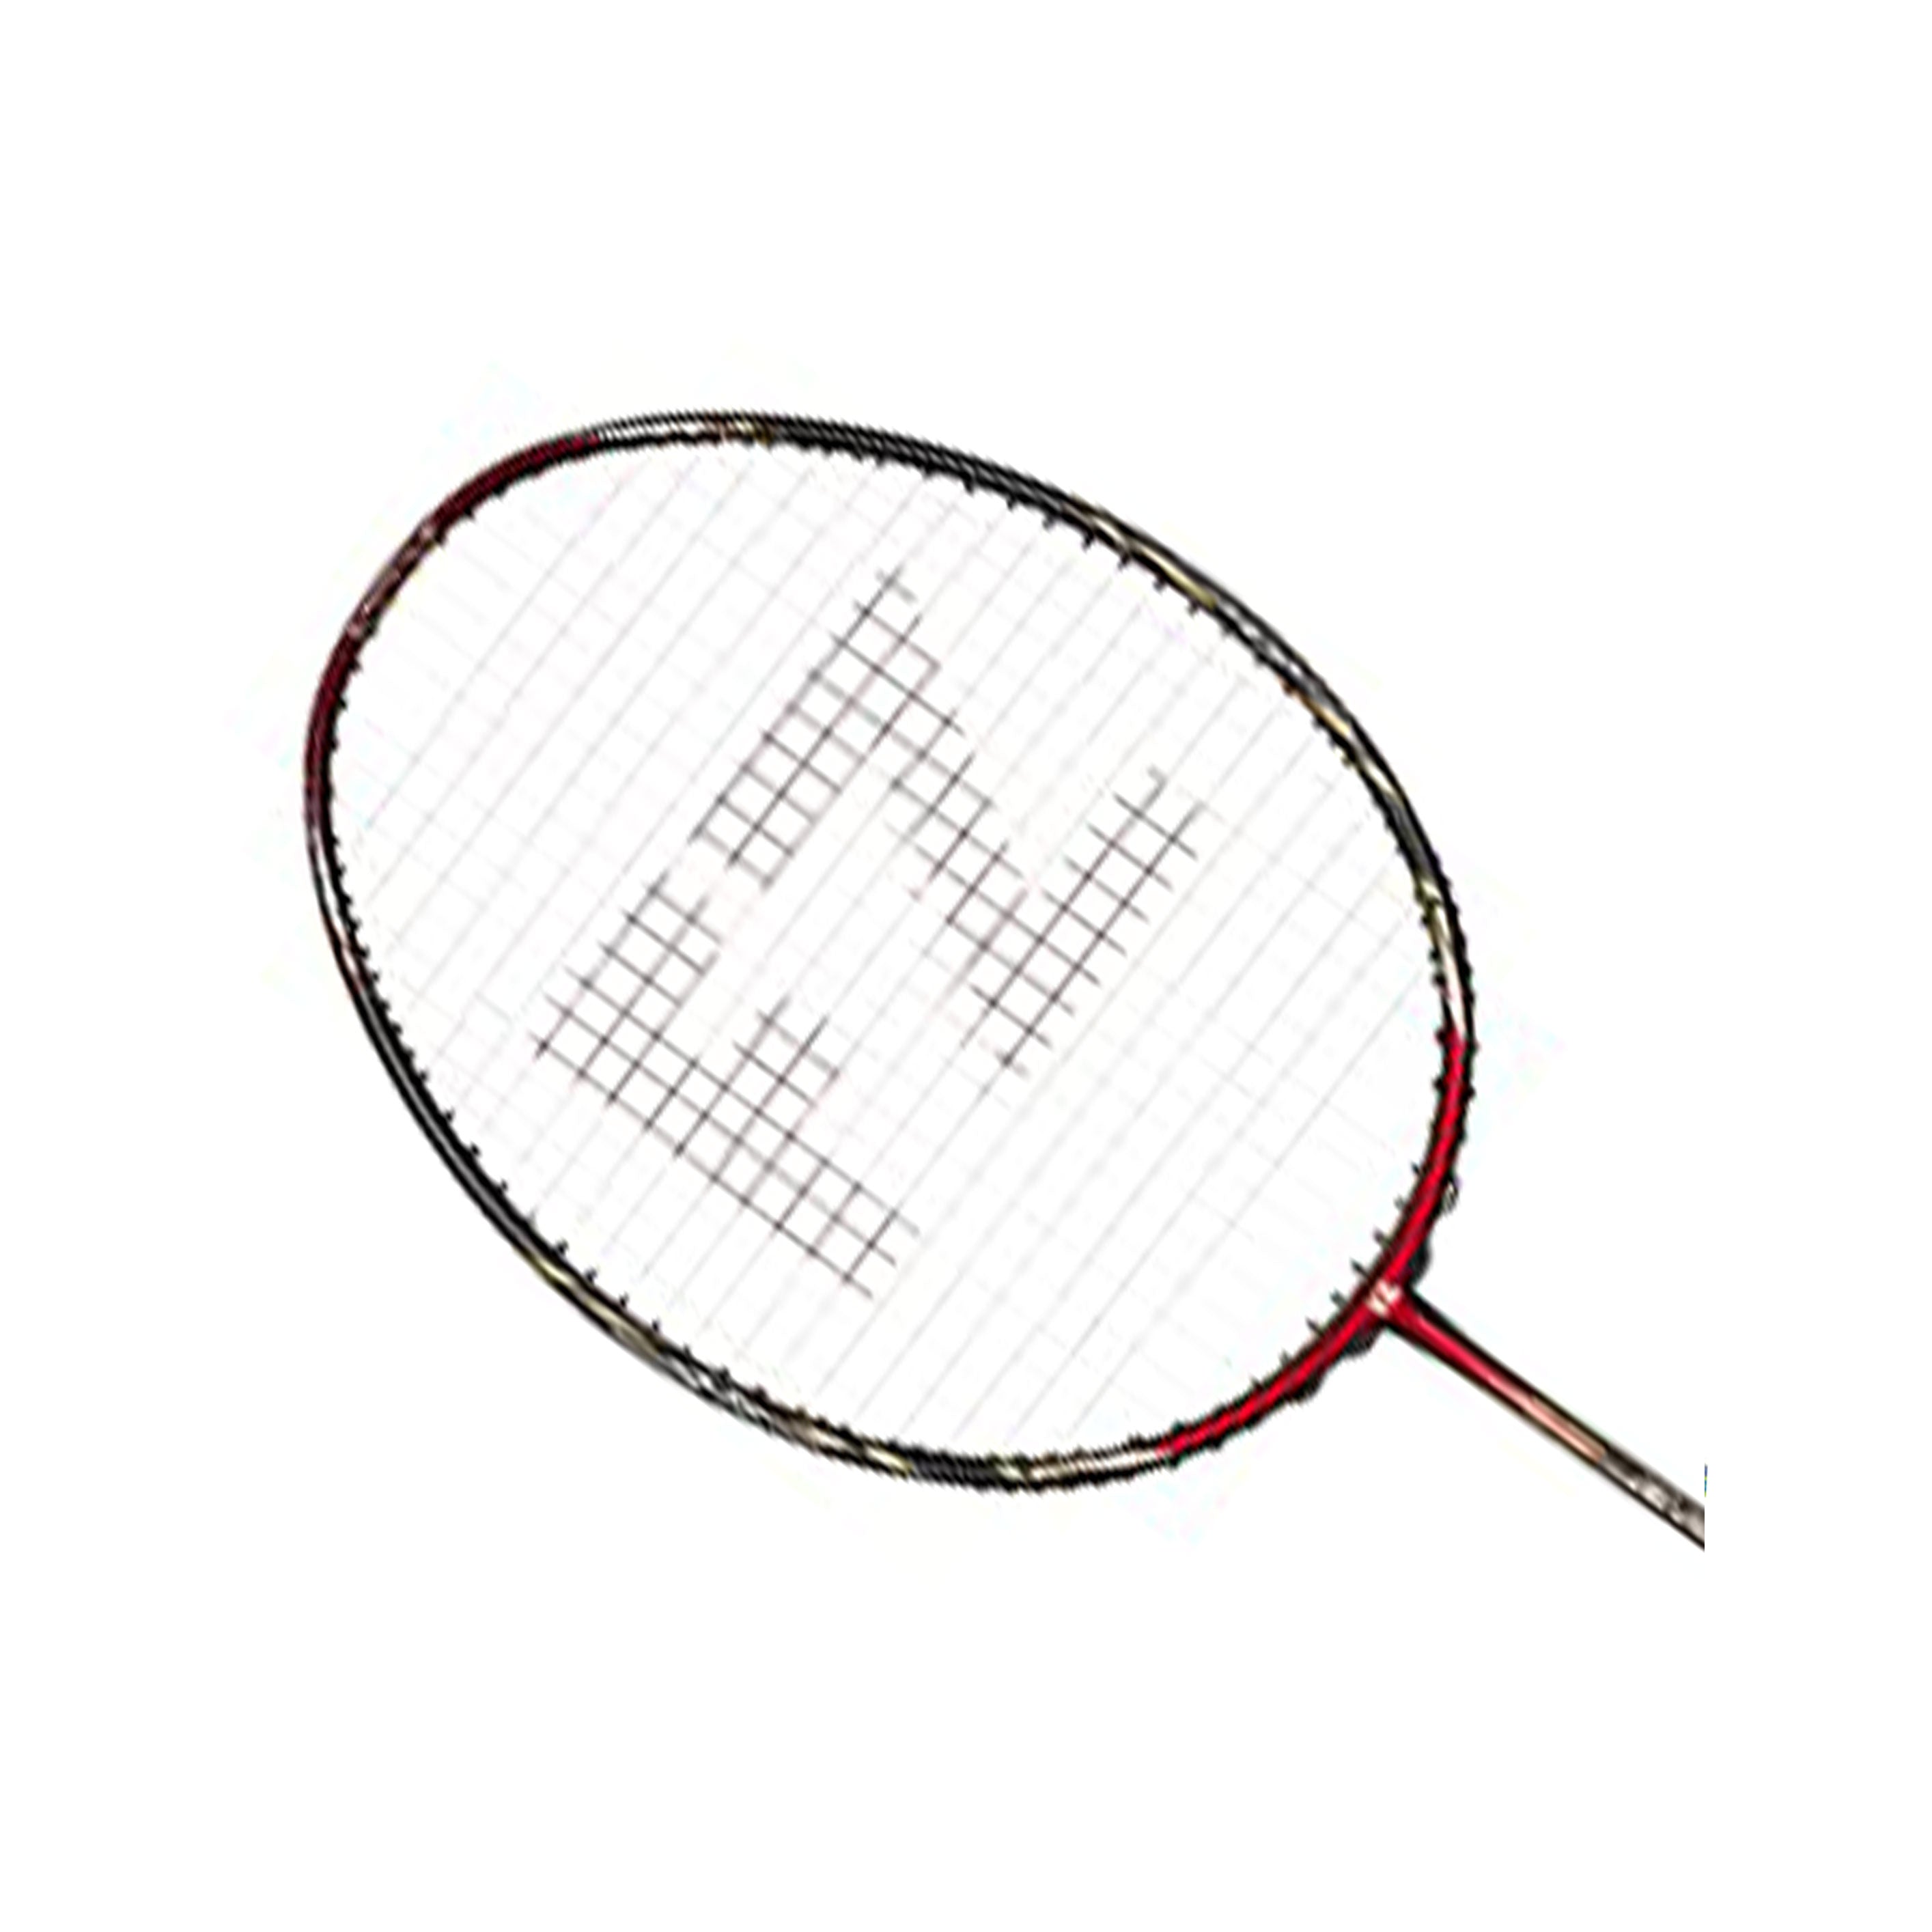 Badminton racket, Badminton racquet, durable racket, graphite racket, even balance, head heavy racket, head light racket, 3u racket, 5u racket, 6u racket, 4u racket, high tension racket, lightweight racket, FZ forza racket, unstrung racket, professional racket, beginner racket, intermediate racket, isometric racket, junior badminton racket, best badminton rackets, Shuttle bat, best smash racket. 28lbs racket, badminton racket under 1000, premium badminton racket